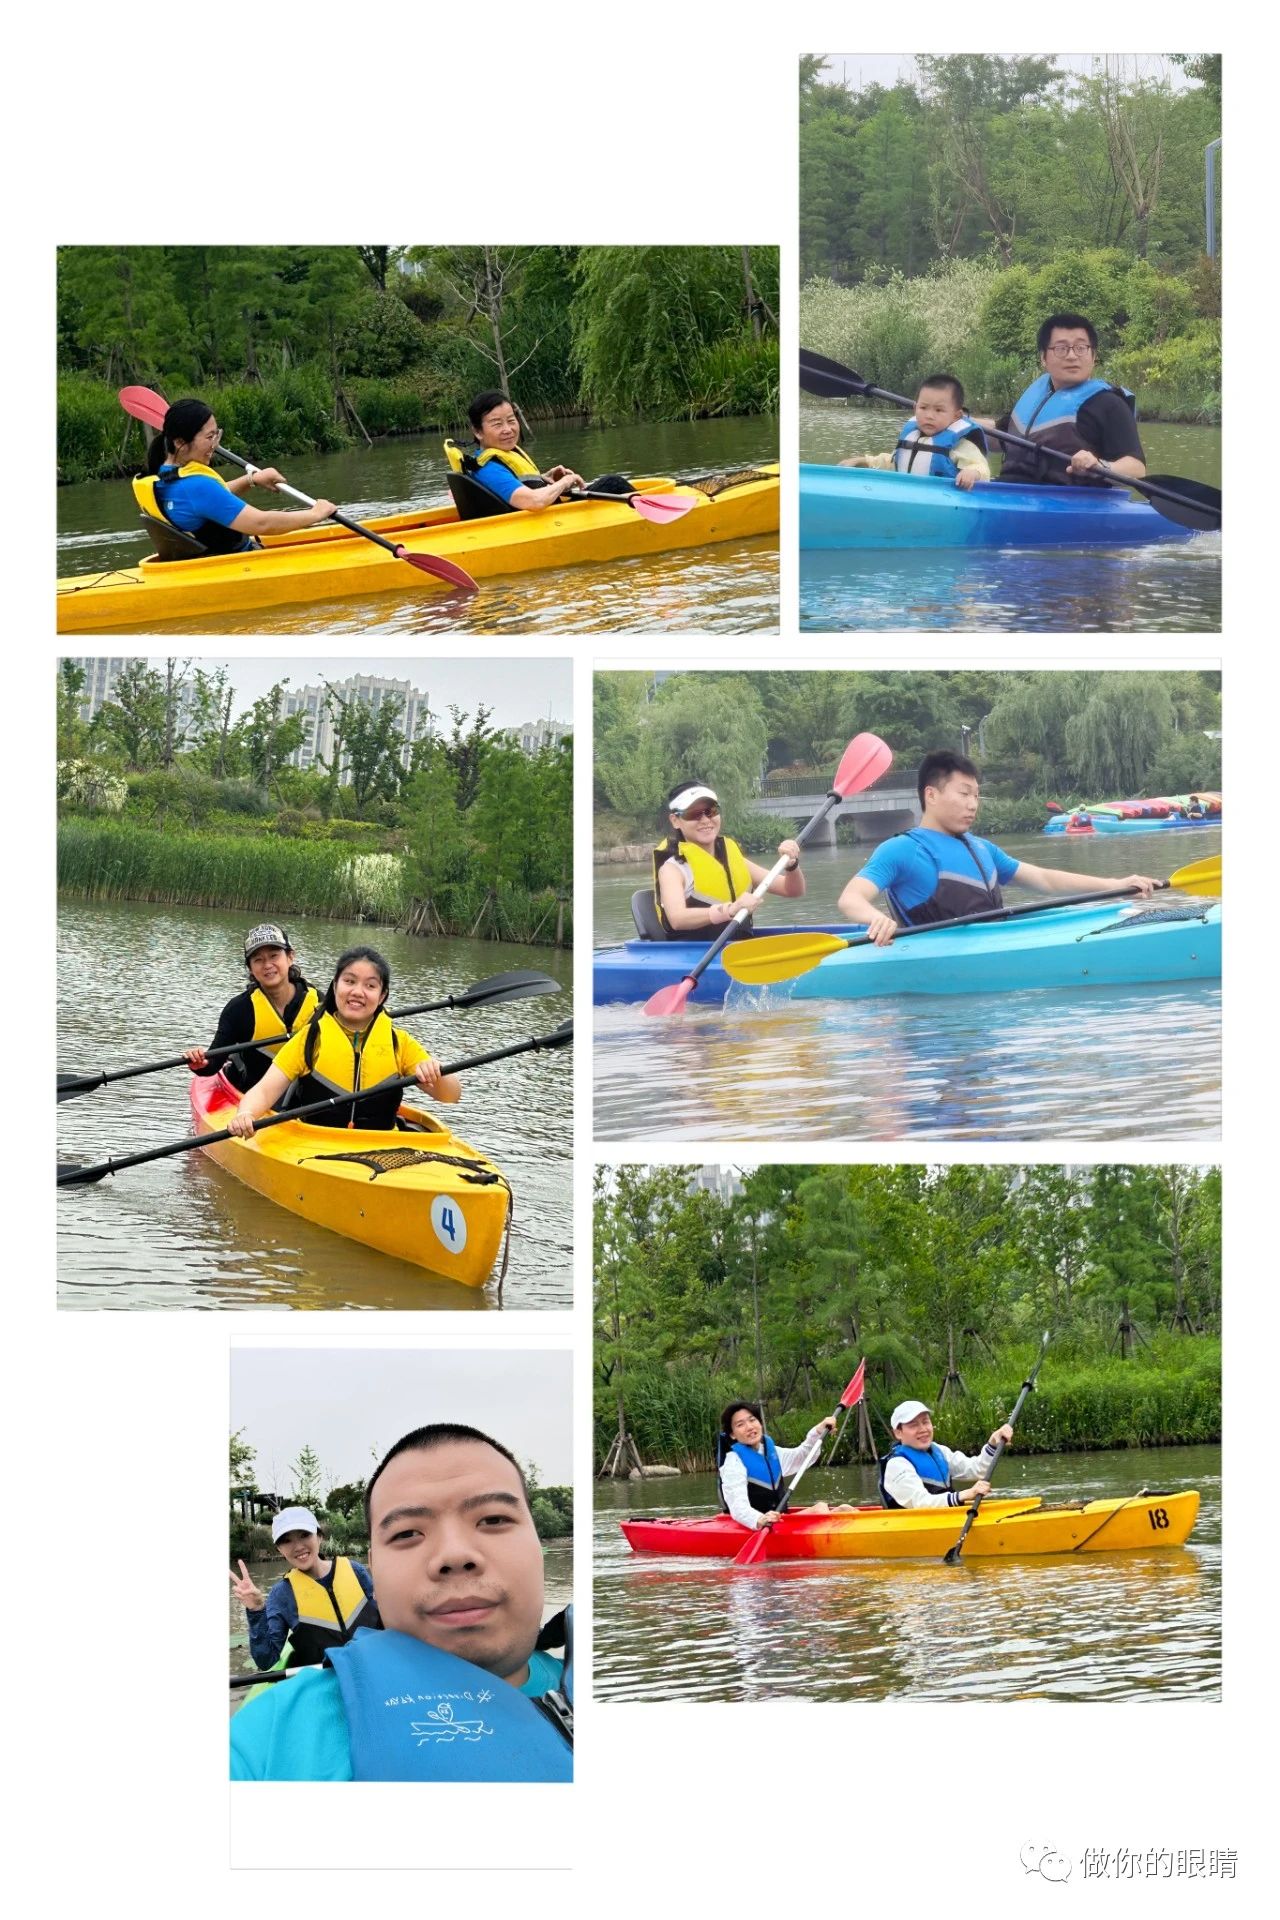 蓝睛灵在专业的指导下进行皮划艇体验 Lanjingling kayaks under the guidance of professionals